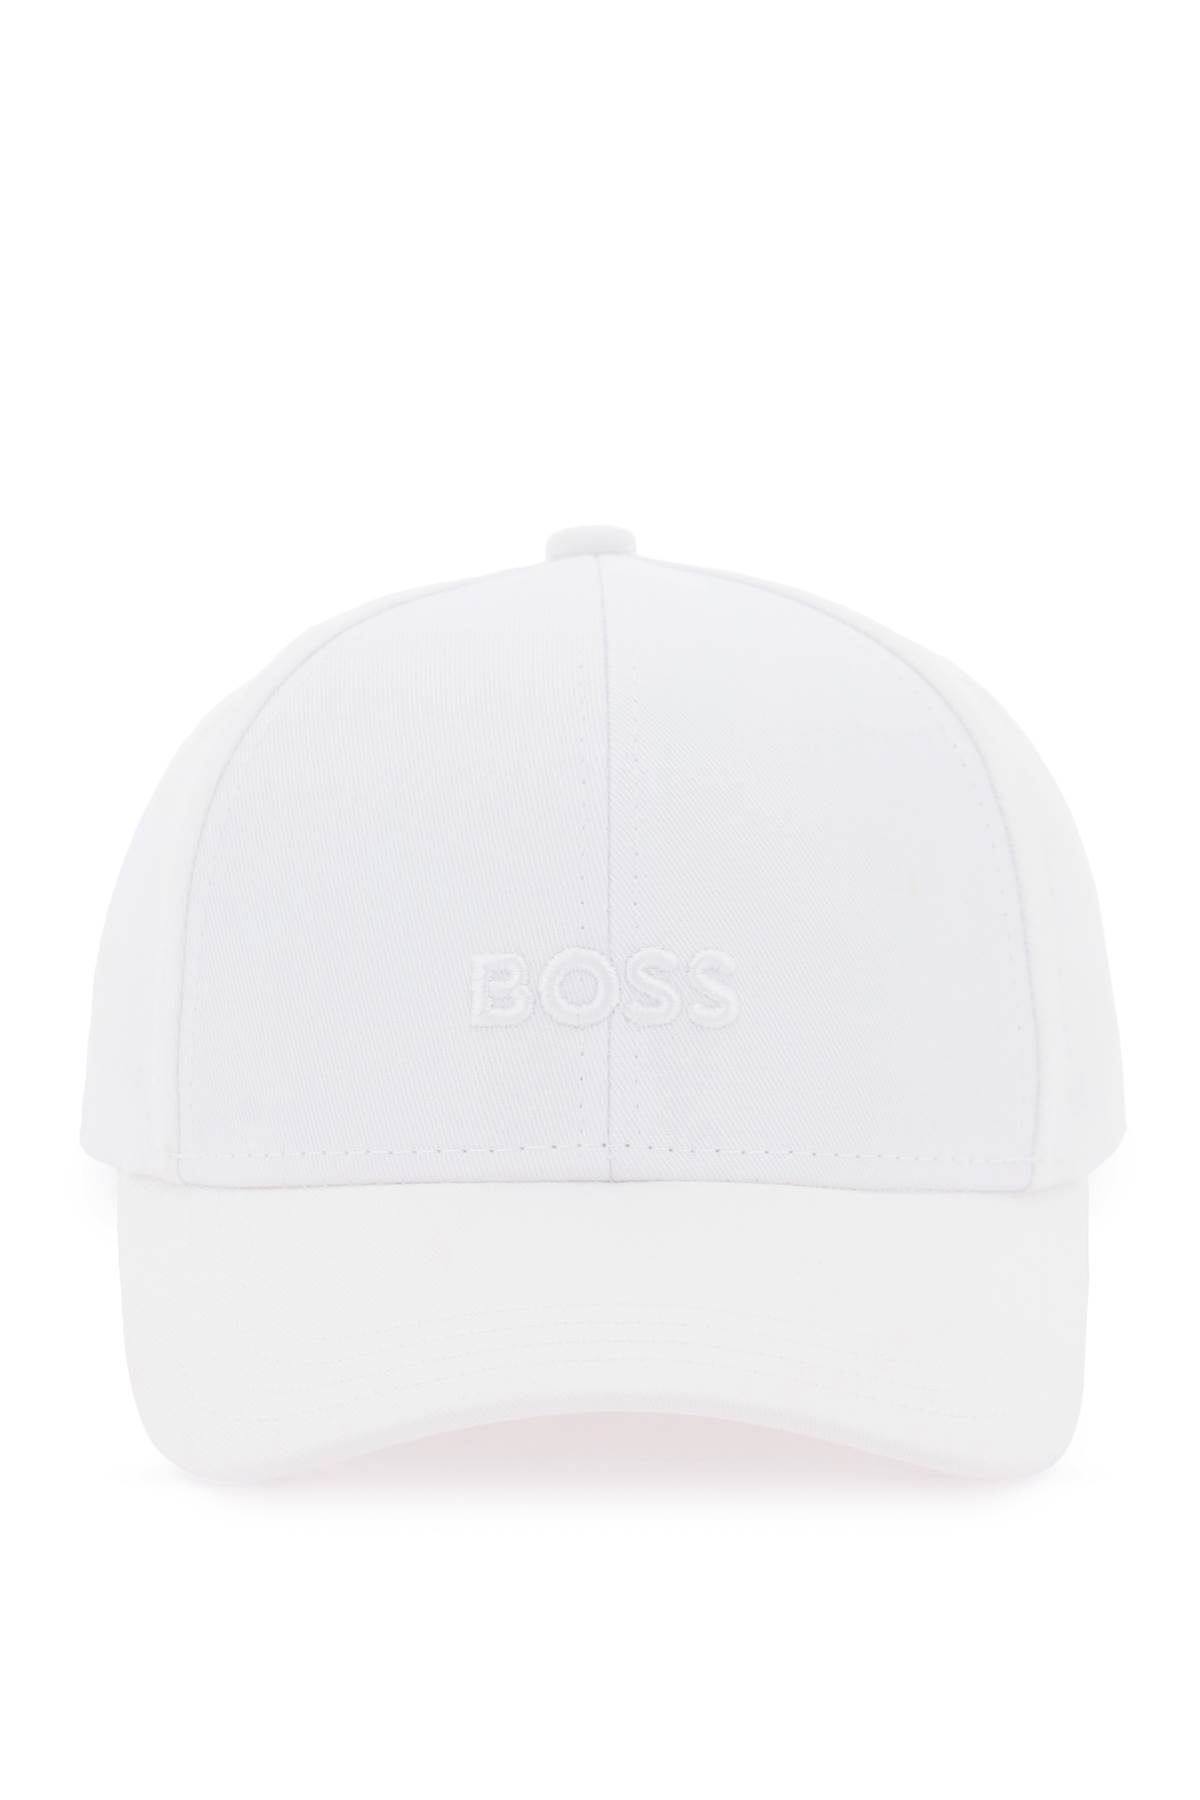 Hugo Boss Baseball Cap With Embroidered Logo | italist, ALWAYS LIKE A SALE | Baseball Caps